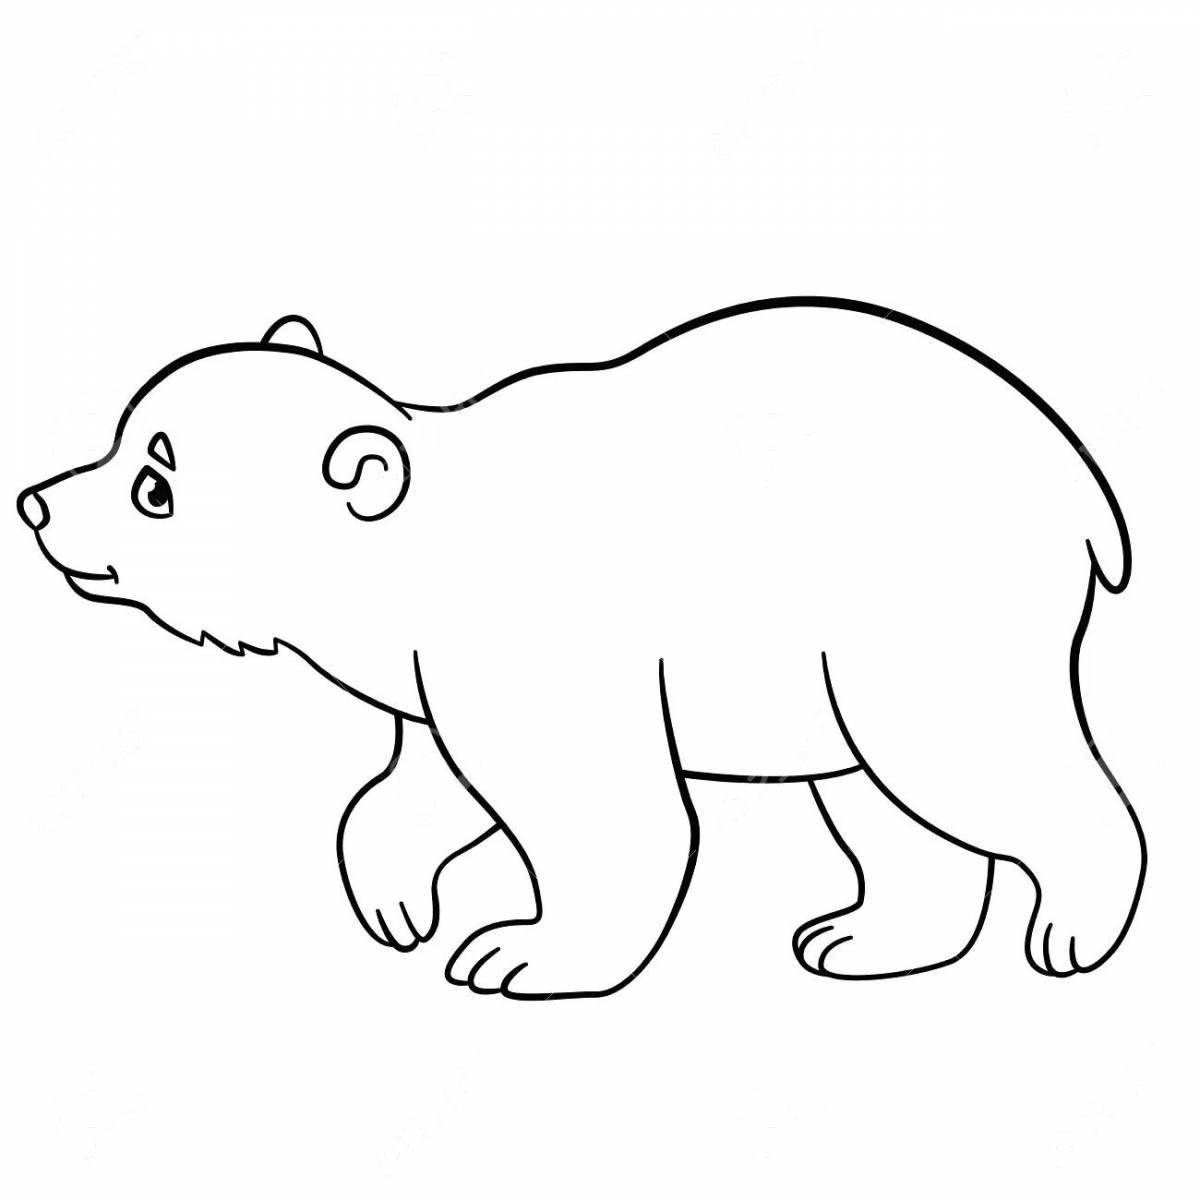 Joyful polar bear coloring pages for kids